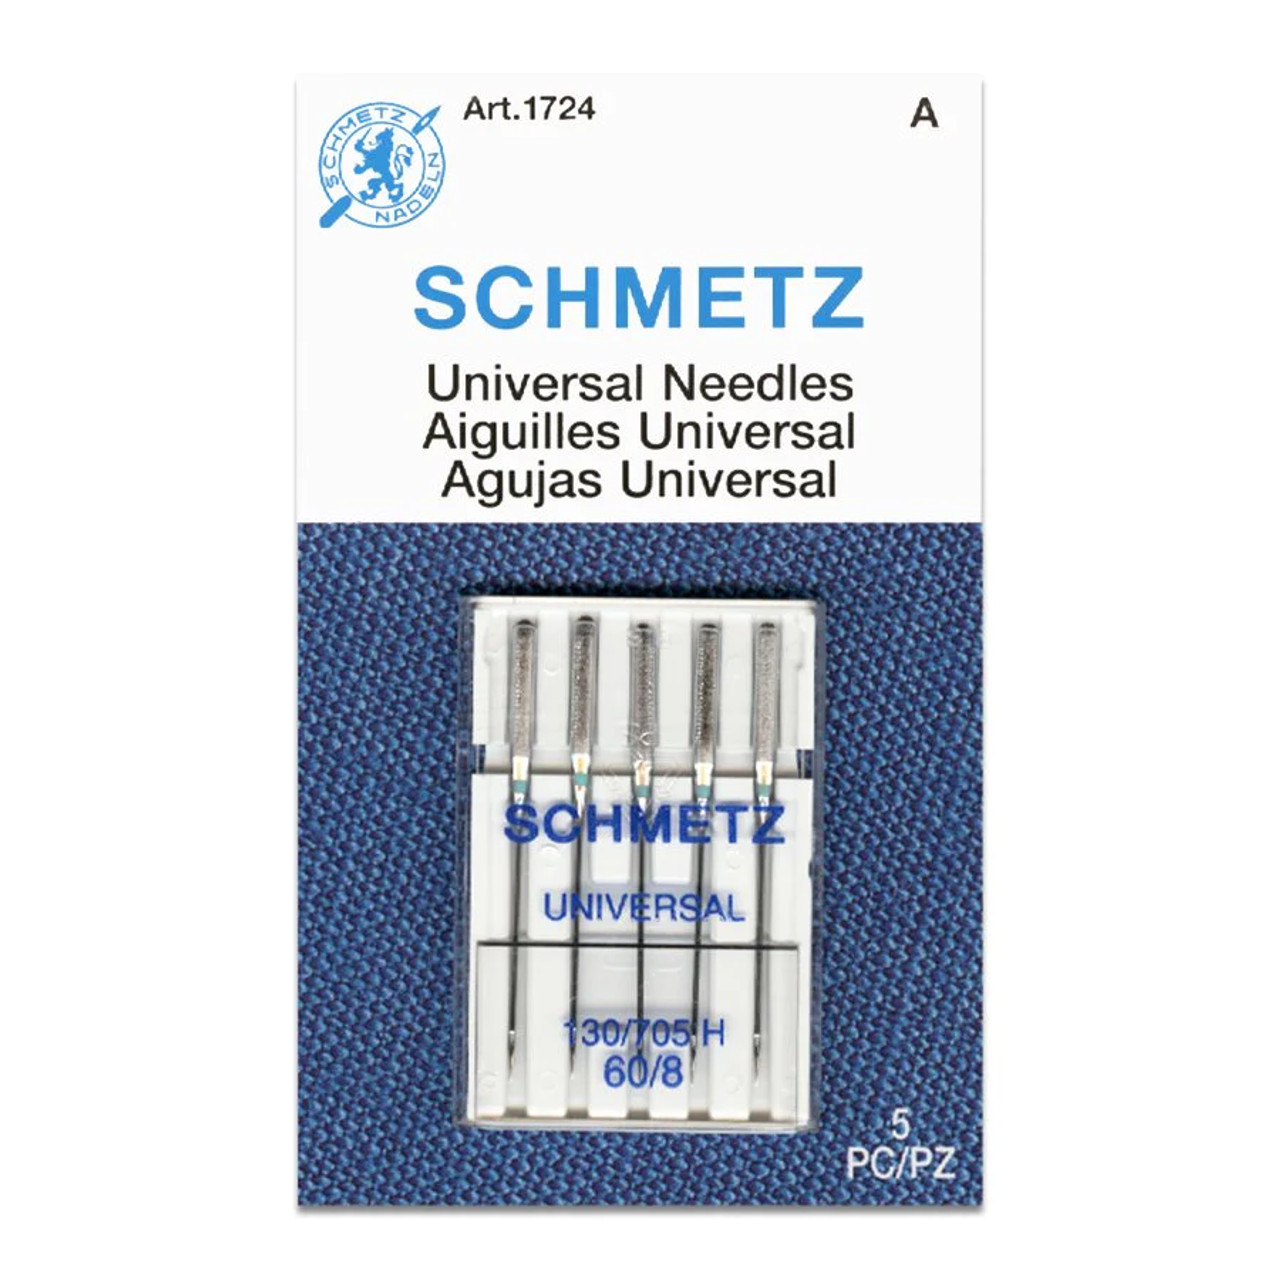 Schmetz Universal Needles 60/8 pack of 5 needles